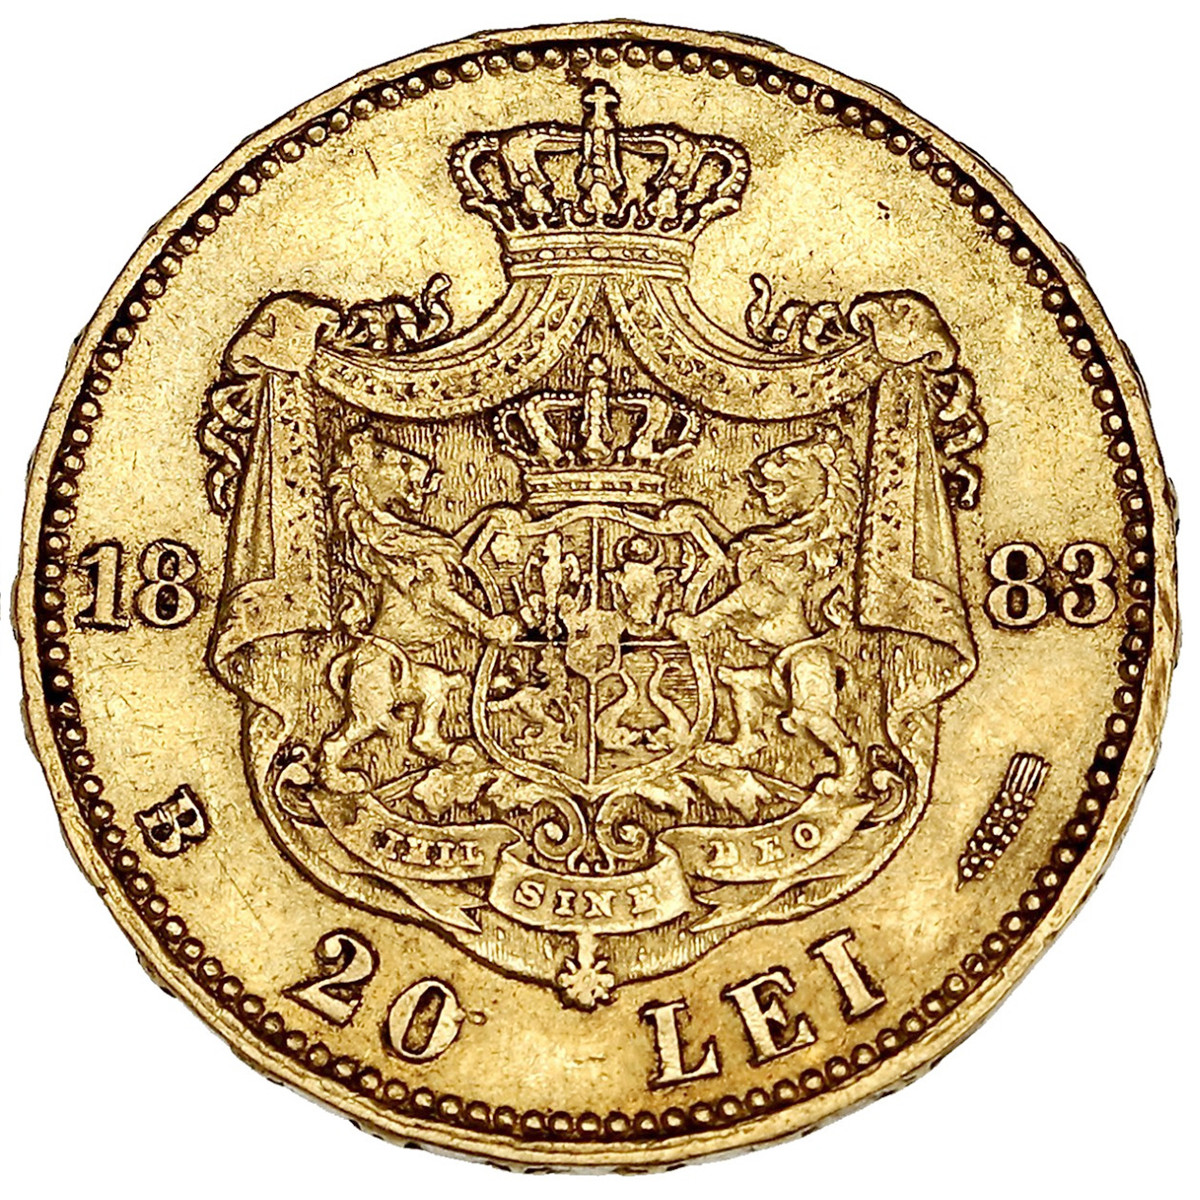 Roumanie - 20 Lei - 1883 revers